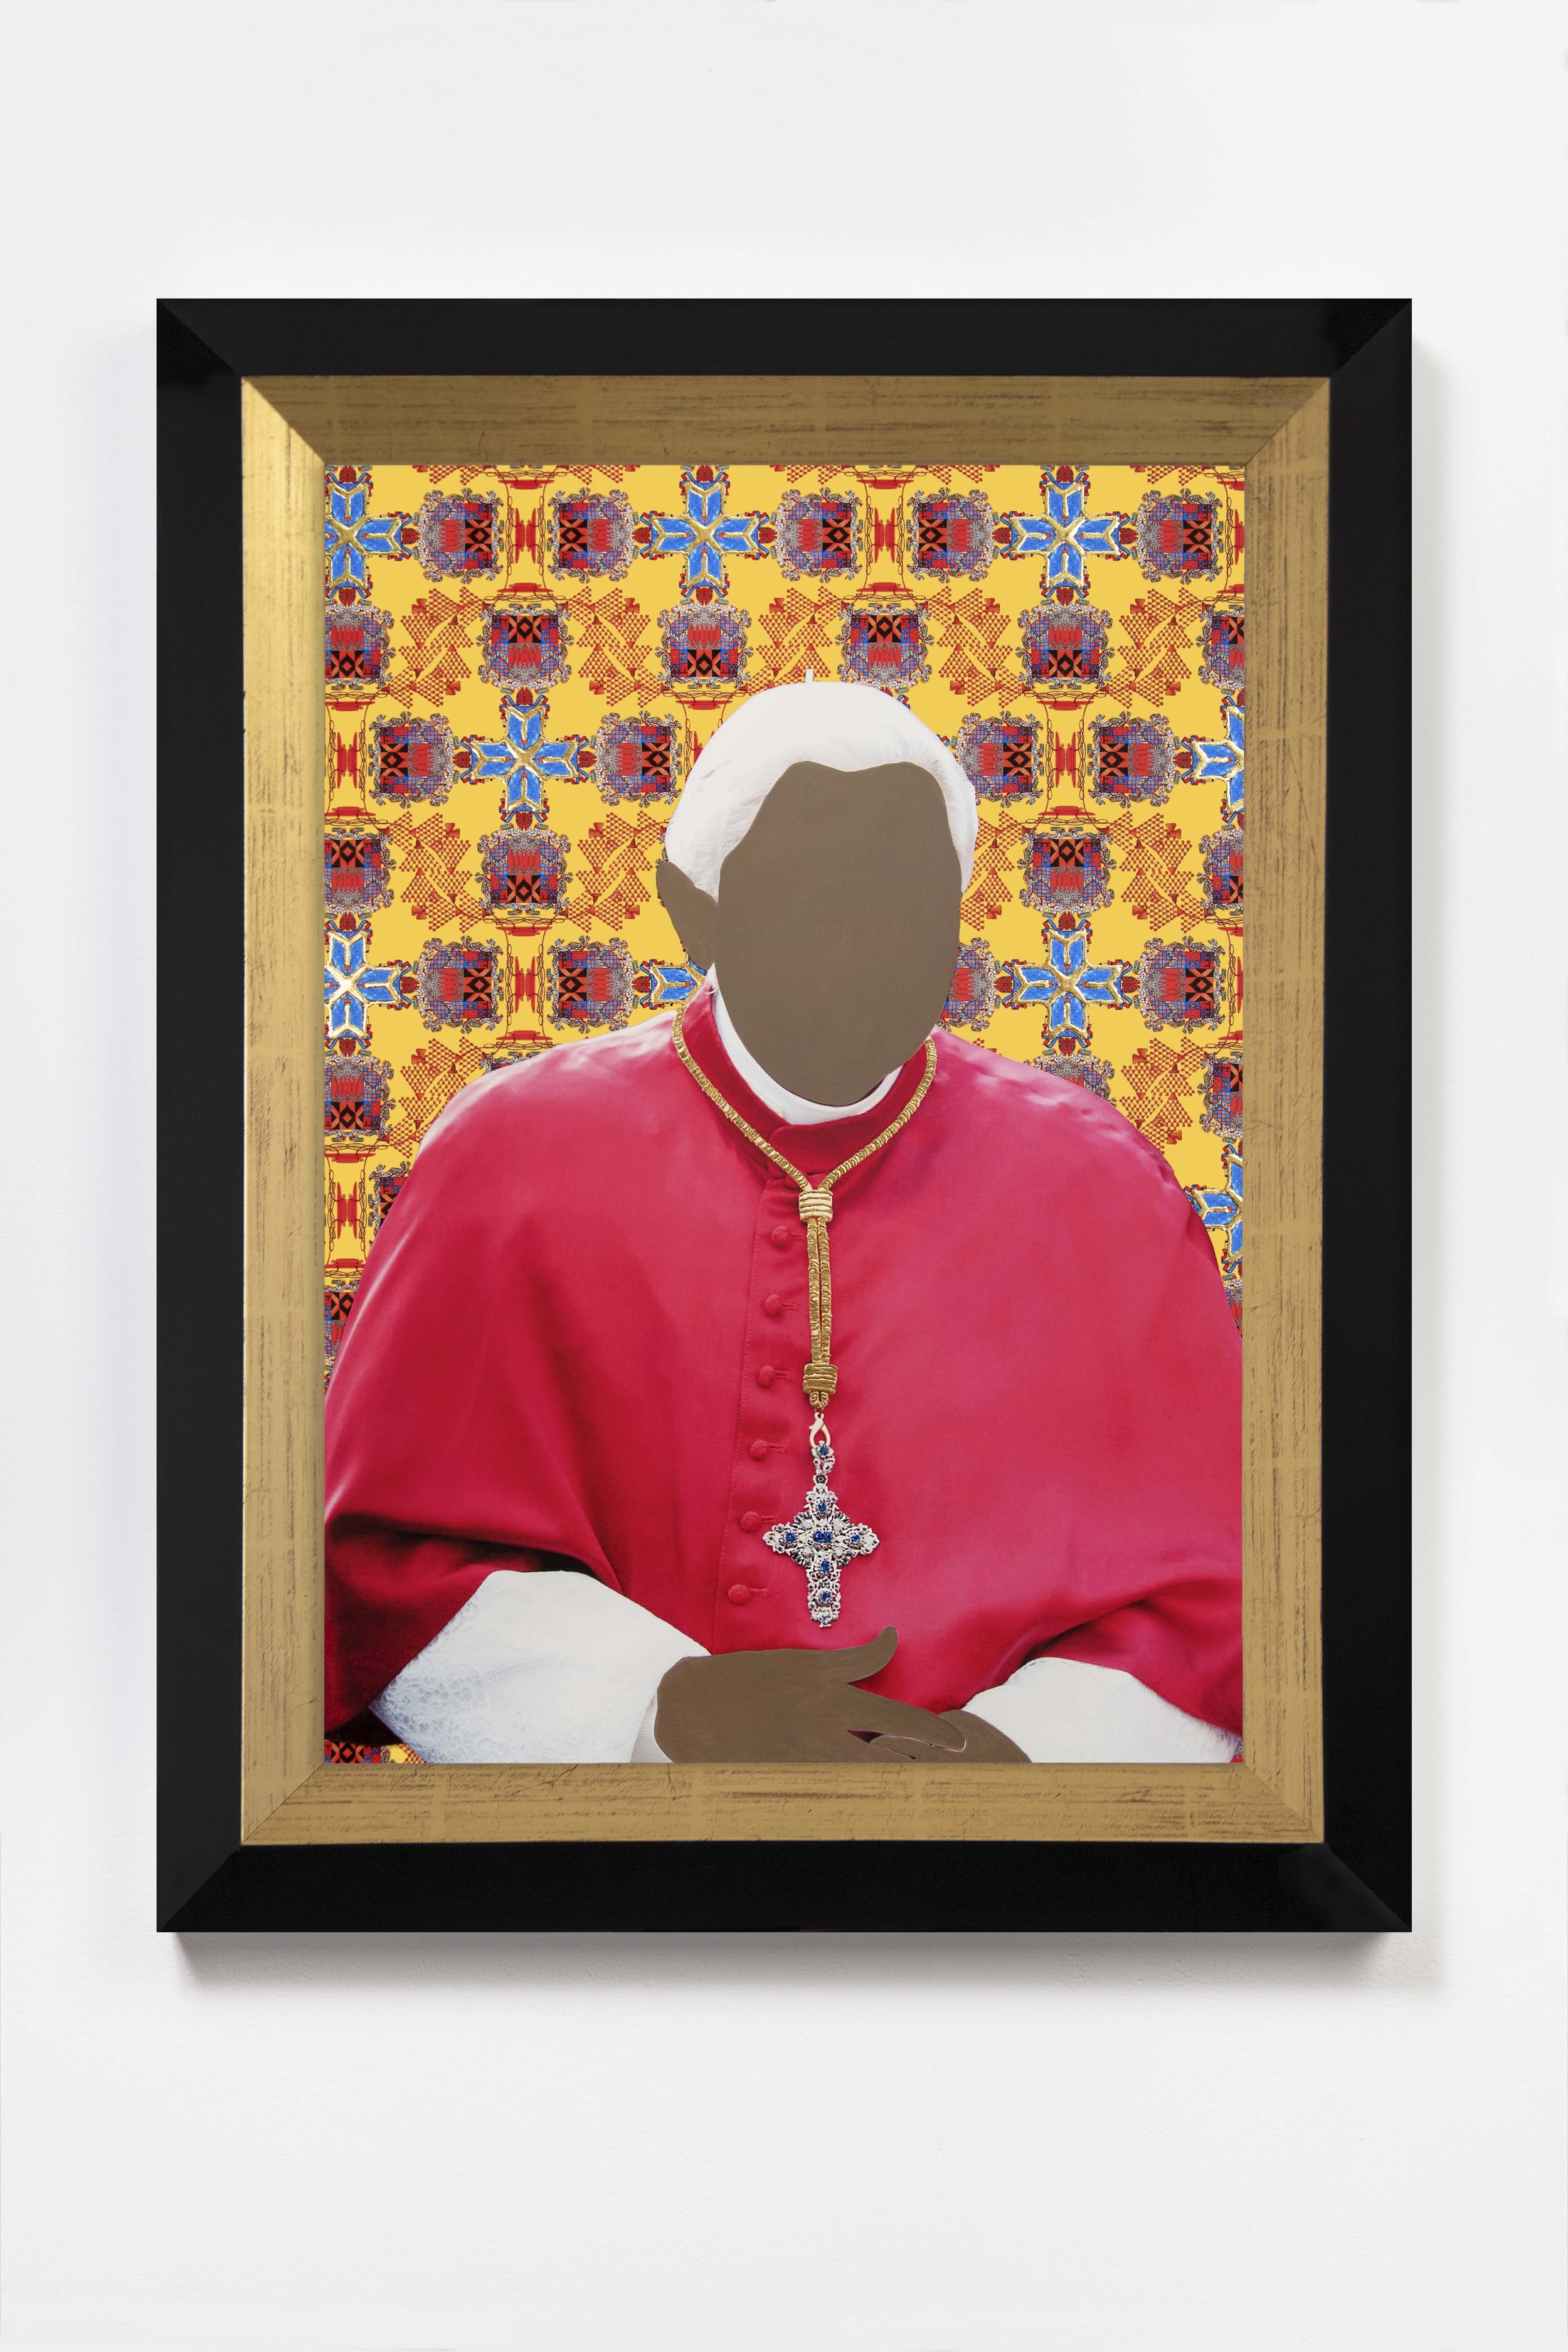 Portraits Framed Final_Pope Benedict.jpg